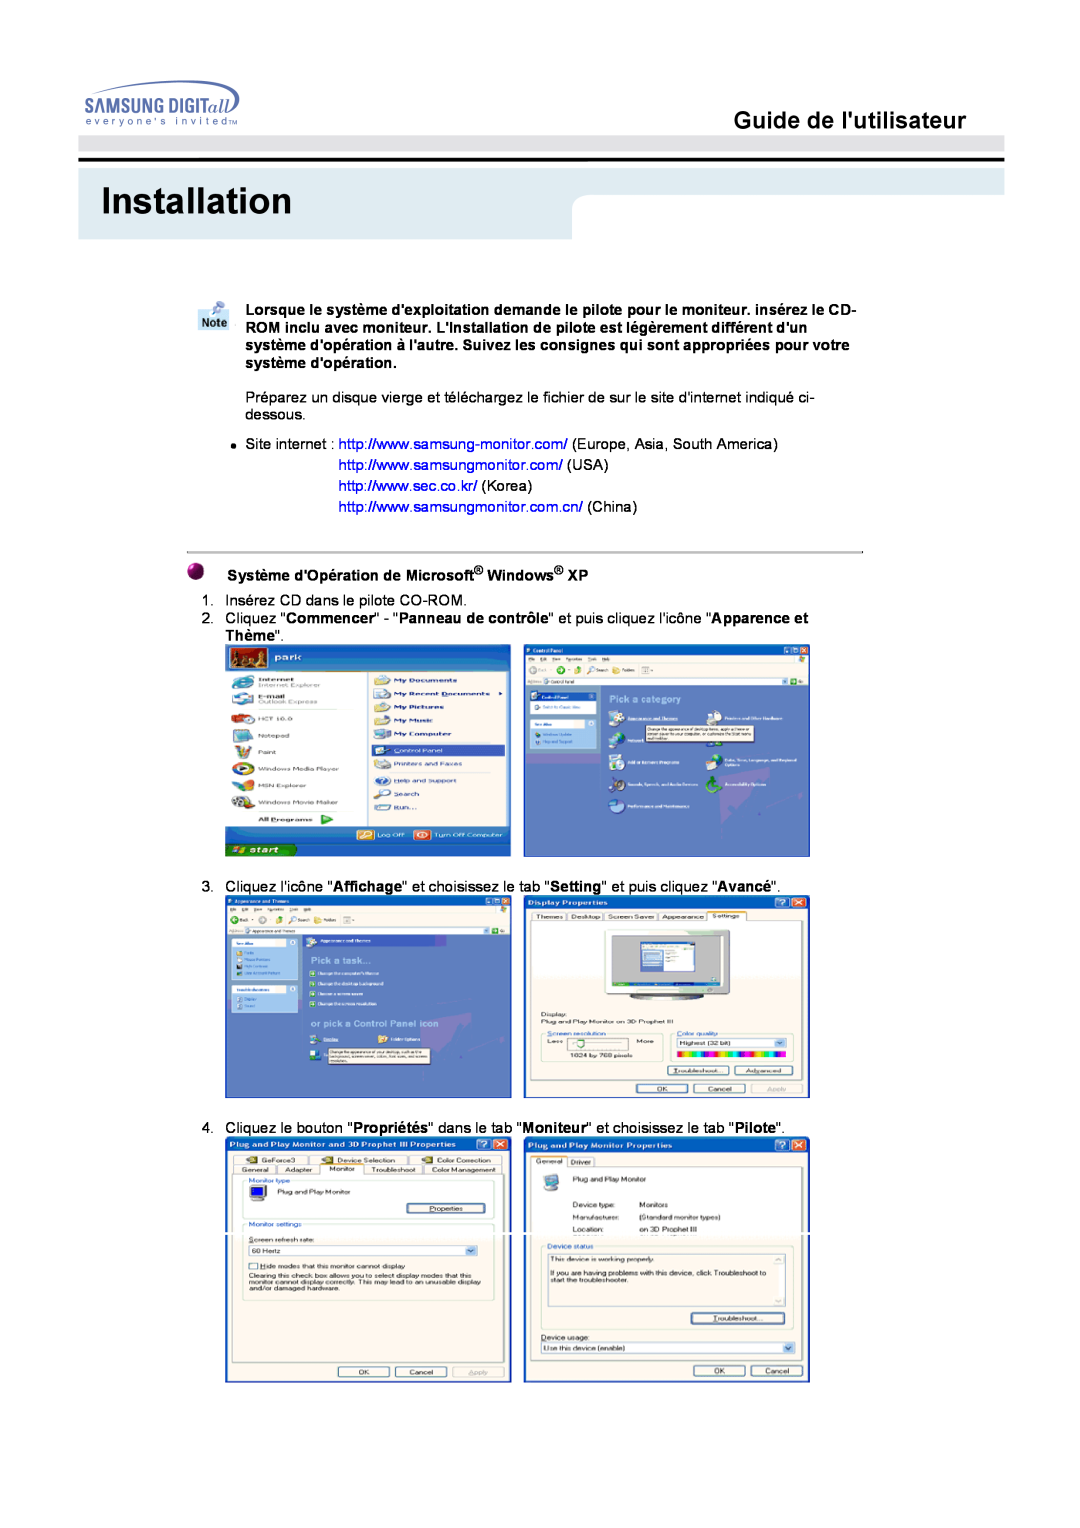 Samsung GG15MSAN/EDC, GH15MSSS/EDC manual Installation, Guide de lutilisateur, Système dOpération de Microsoft Windows XP 